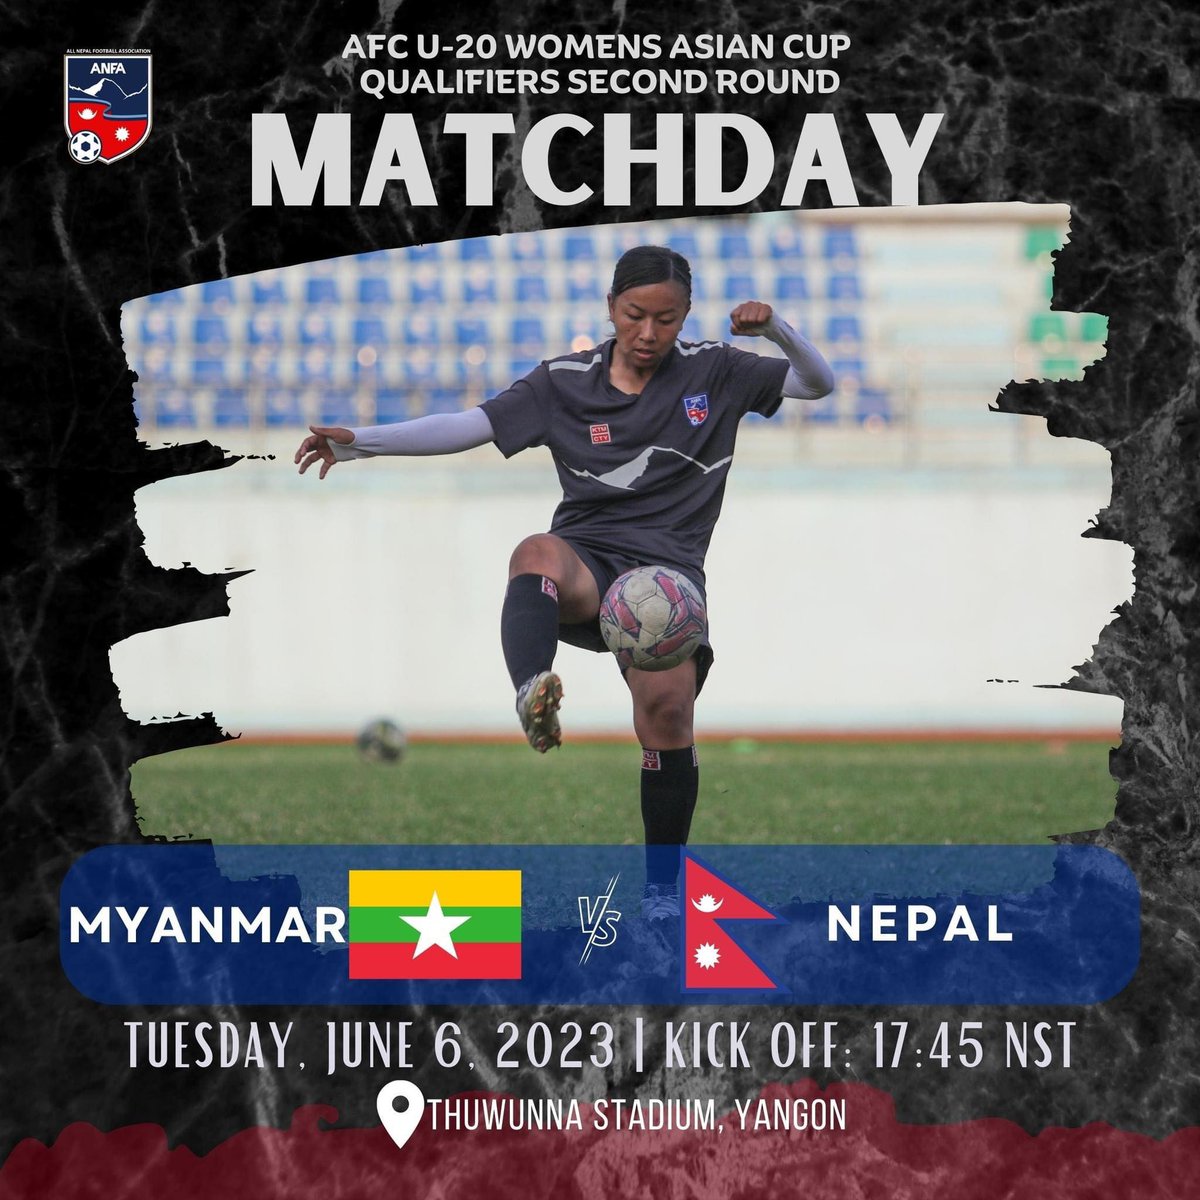 𝗔𝗙𝗖 𝗨-𝟮𝟬 𝗪𝗢𝗠𝗘𝗡𝗦 𝗔𝗦𝗜𝗔𝗡 𝗖𝗨𝗣 𝗤𝗨𝗔𝗟𝗜𝗙𝗜𝗘𝗥𝗦

          𝐌𝐀𝐓𝐂𝐇 - 𝐃𝐀𝐘 | 𝐒𝐞𝐜𝐨𝐧𝐝 𝐑𝐨𝐮𝐧𝐝

            🇲🇲 MYANMAR vs NEPAL 🇳🇵

⏰ 17:45 NST (5:45 PM)
🏟️ Thuwunna Stadium, YANGON
#NepalFootball #WomensFootball #AFCU20 #Womens #AsianCup #Qualifiers